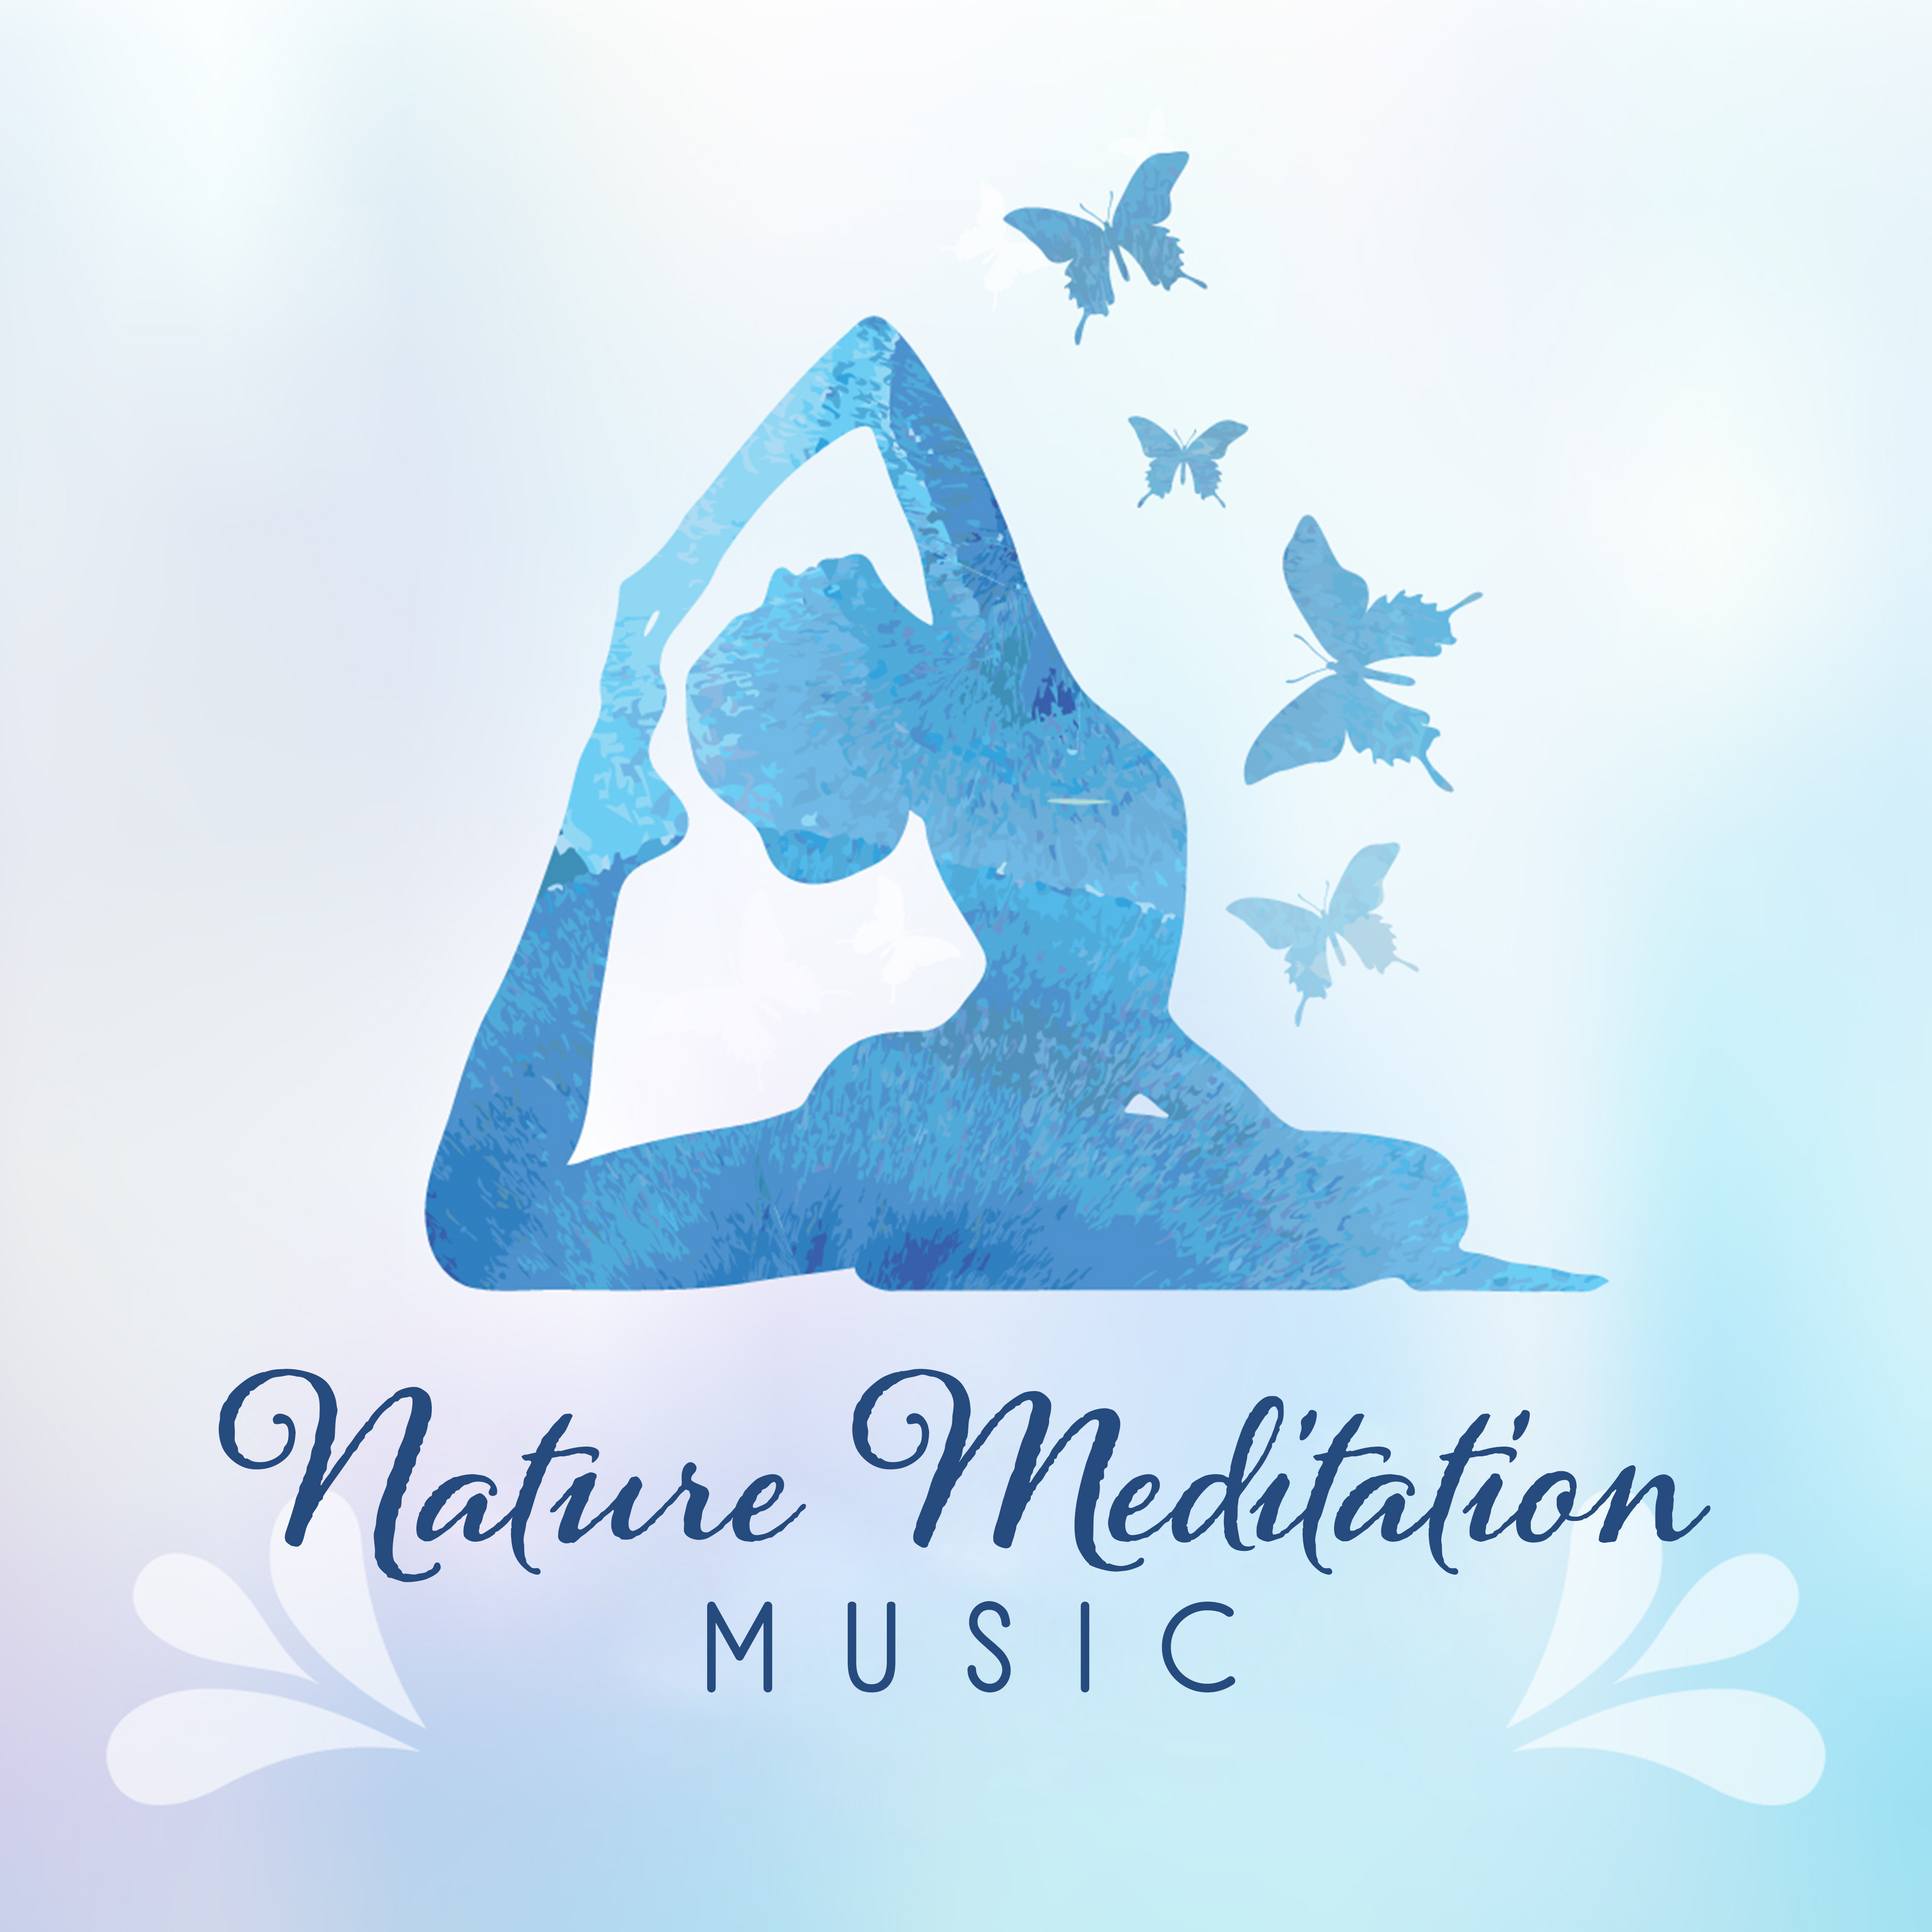 Nature Meditation Music